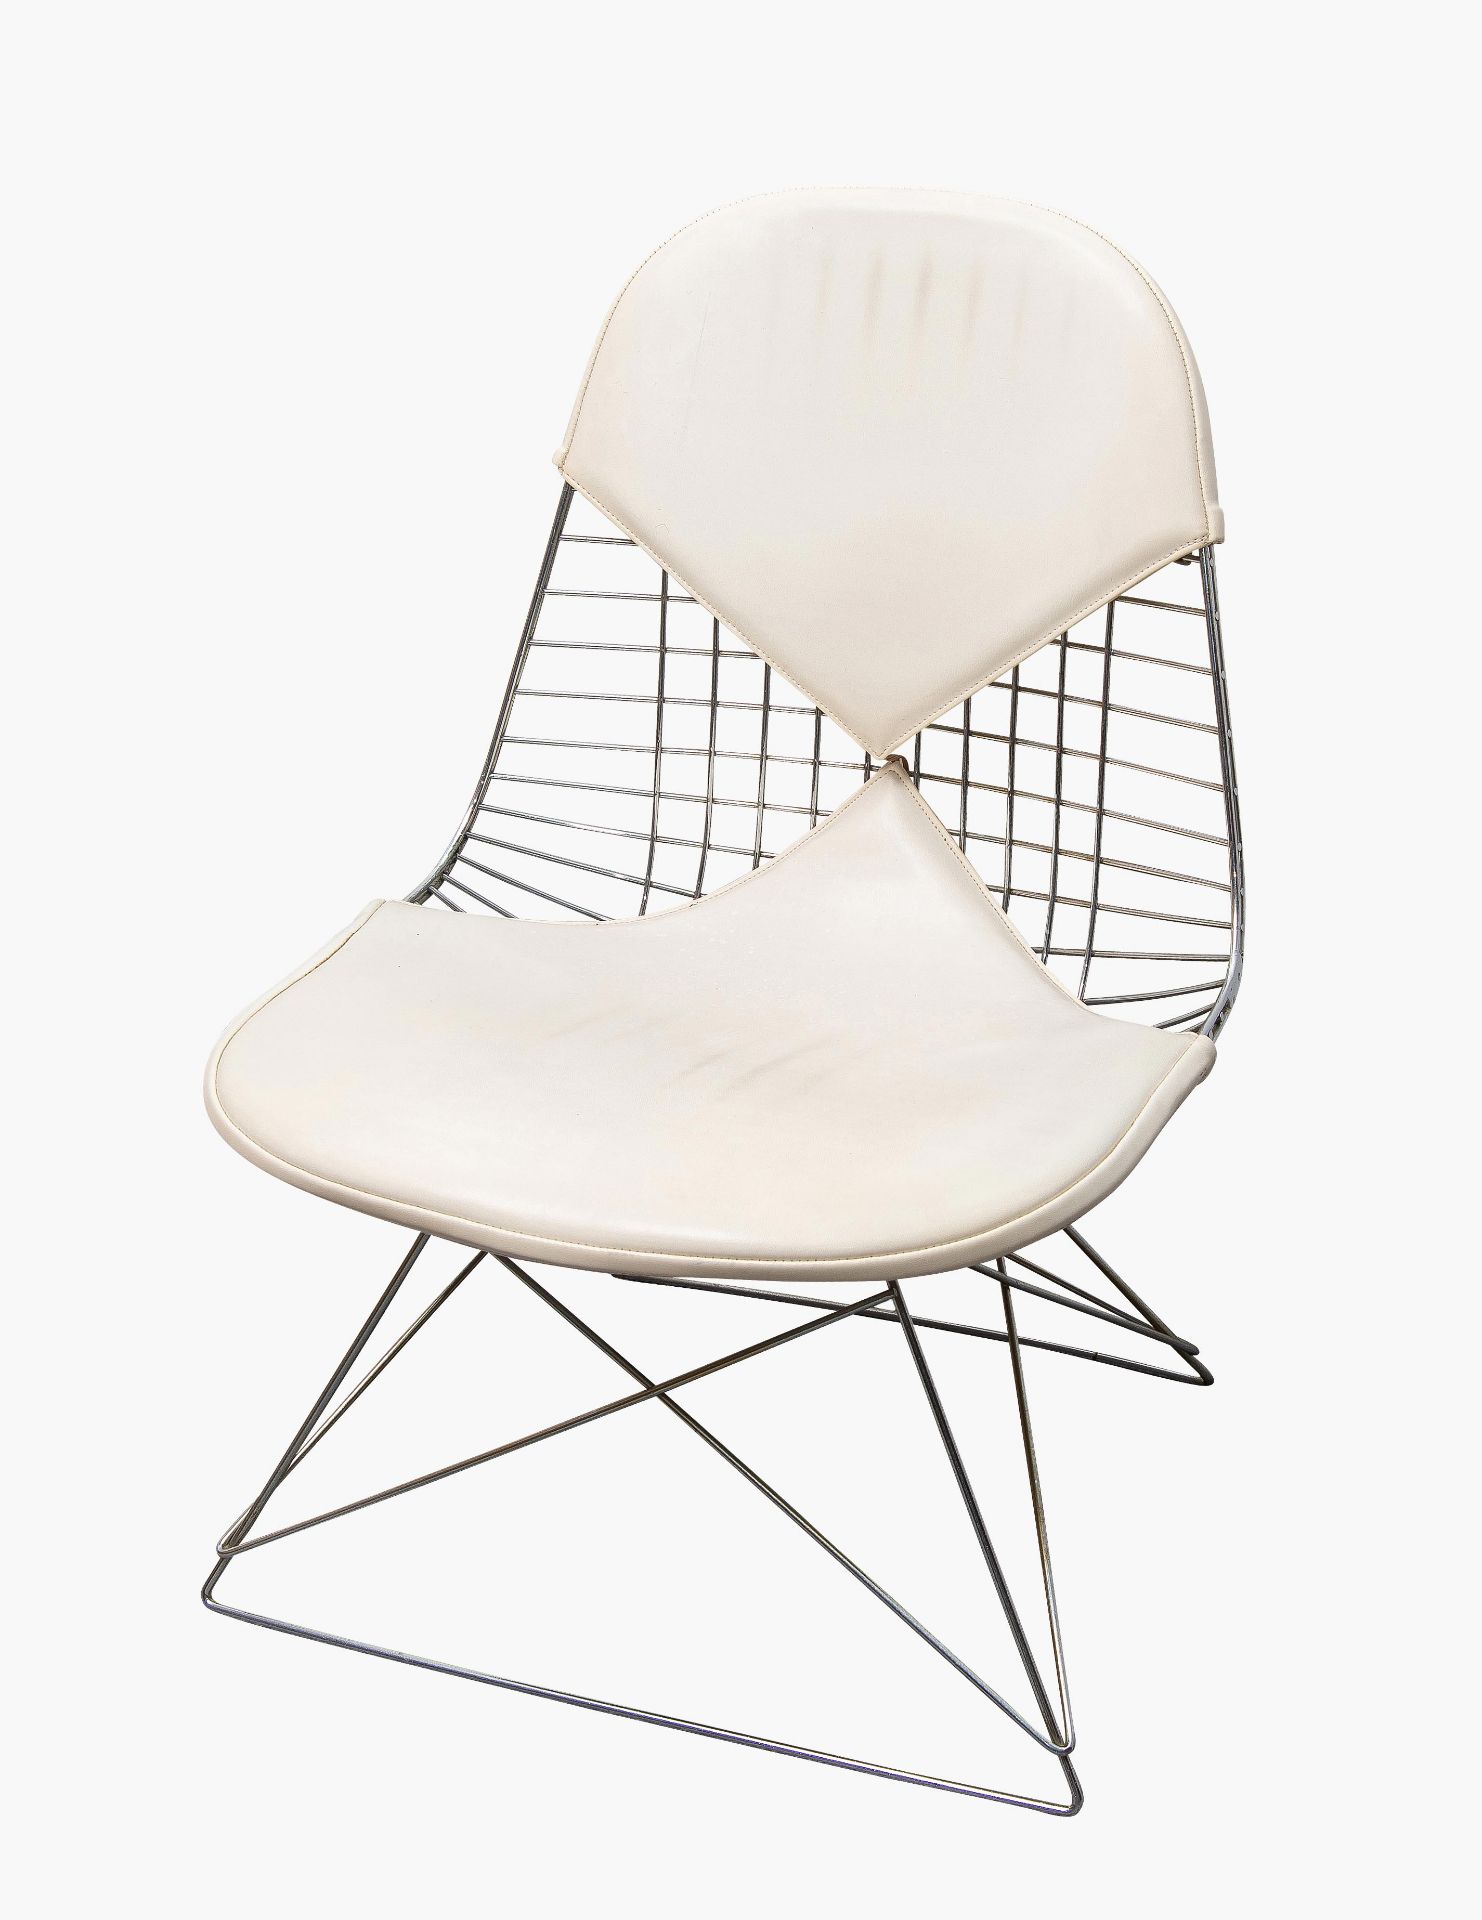 Charles Eames, Stuhl "Bikini Wire Chair" auf "Low Rod Base"